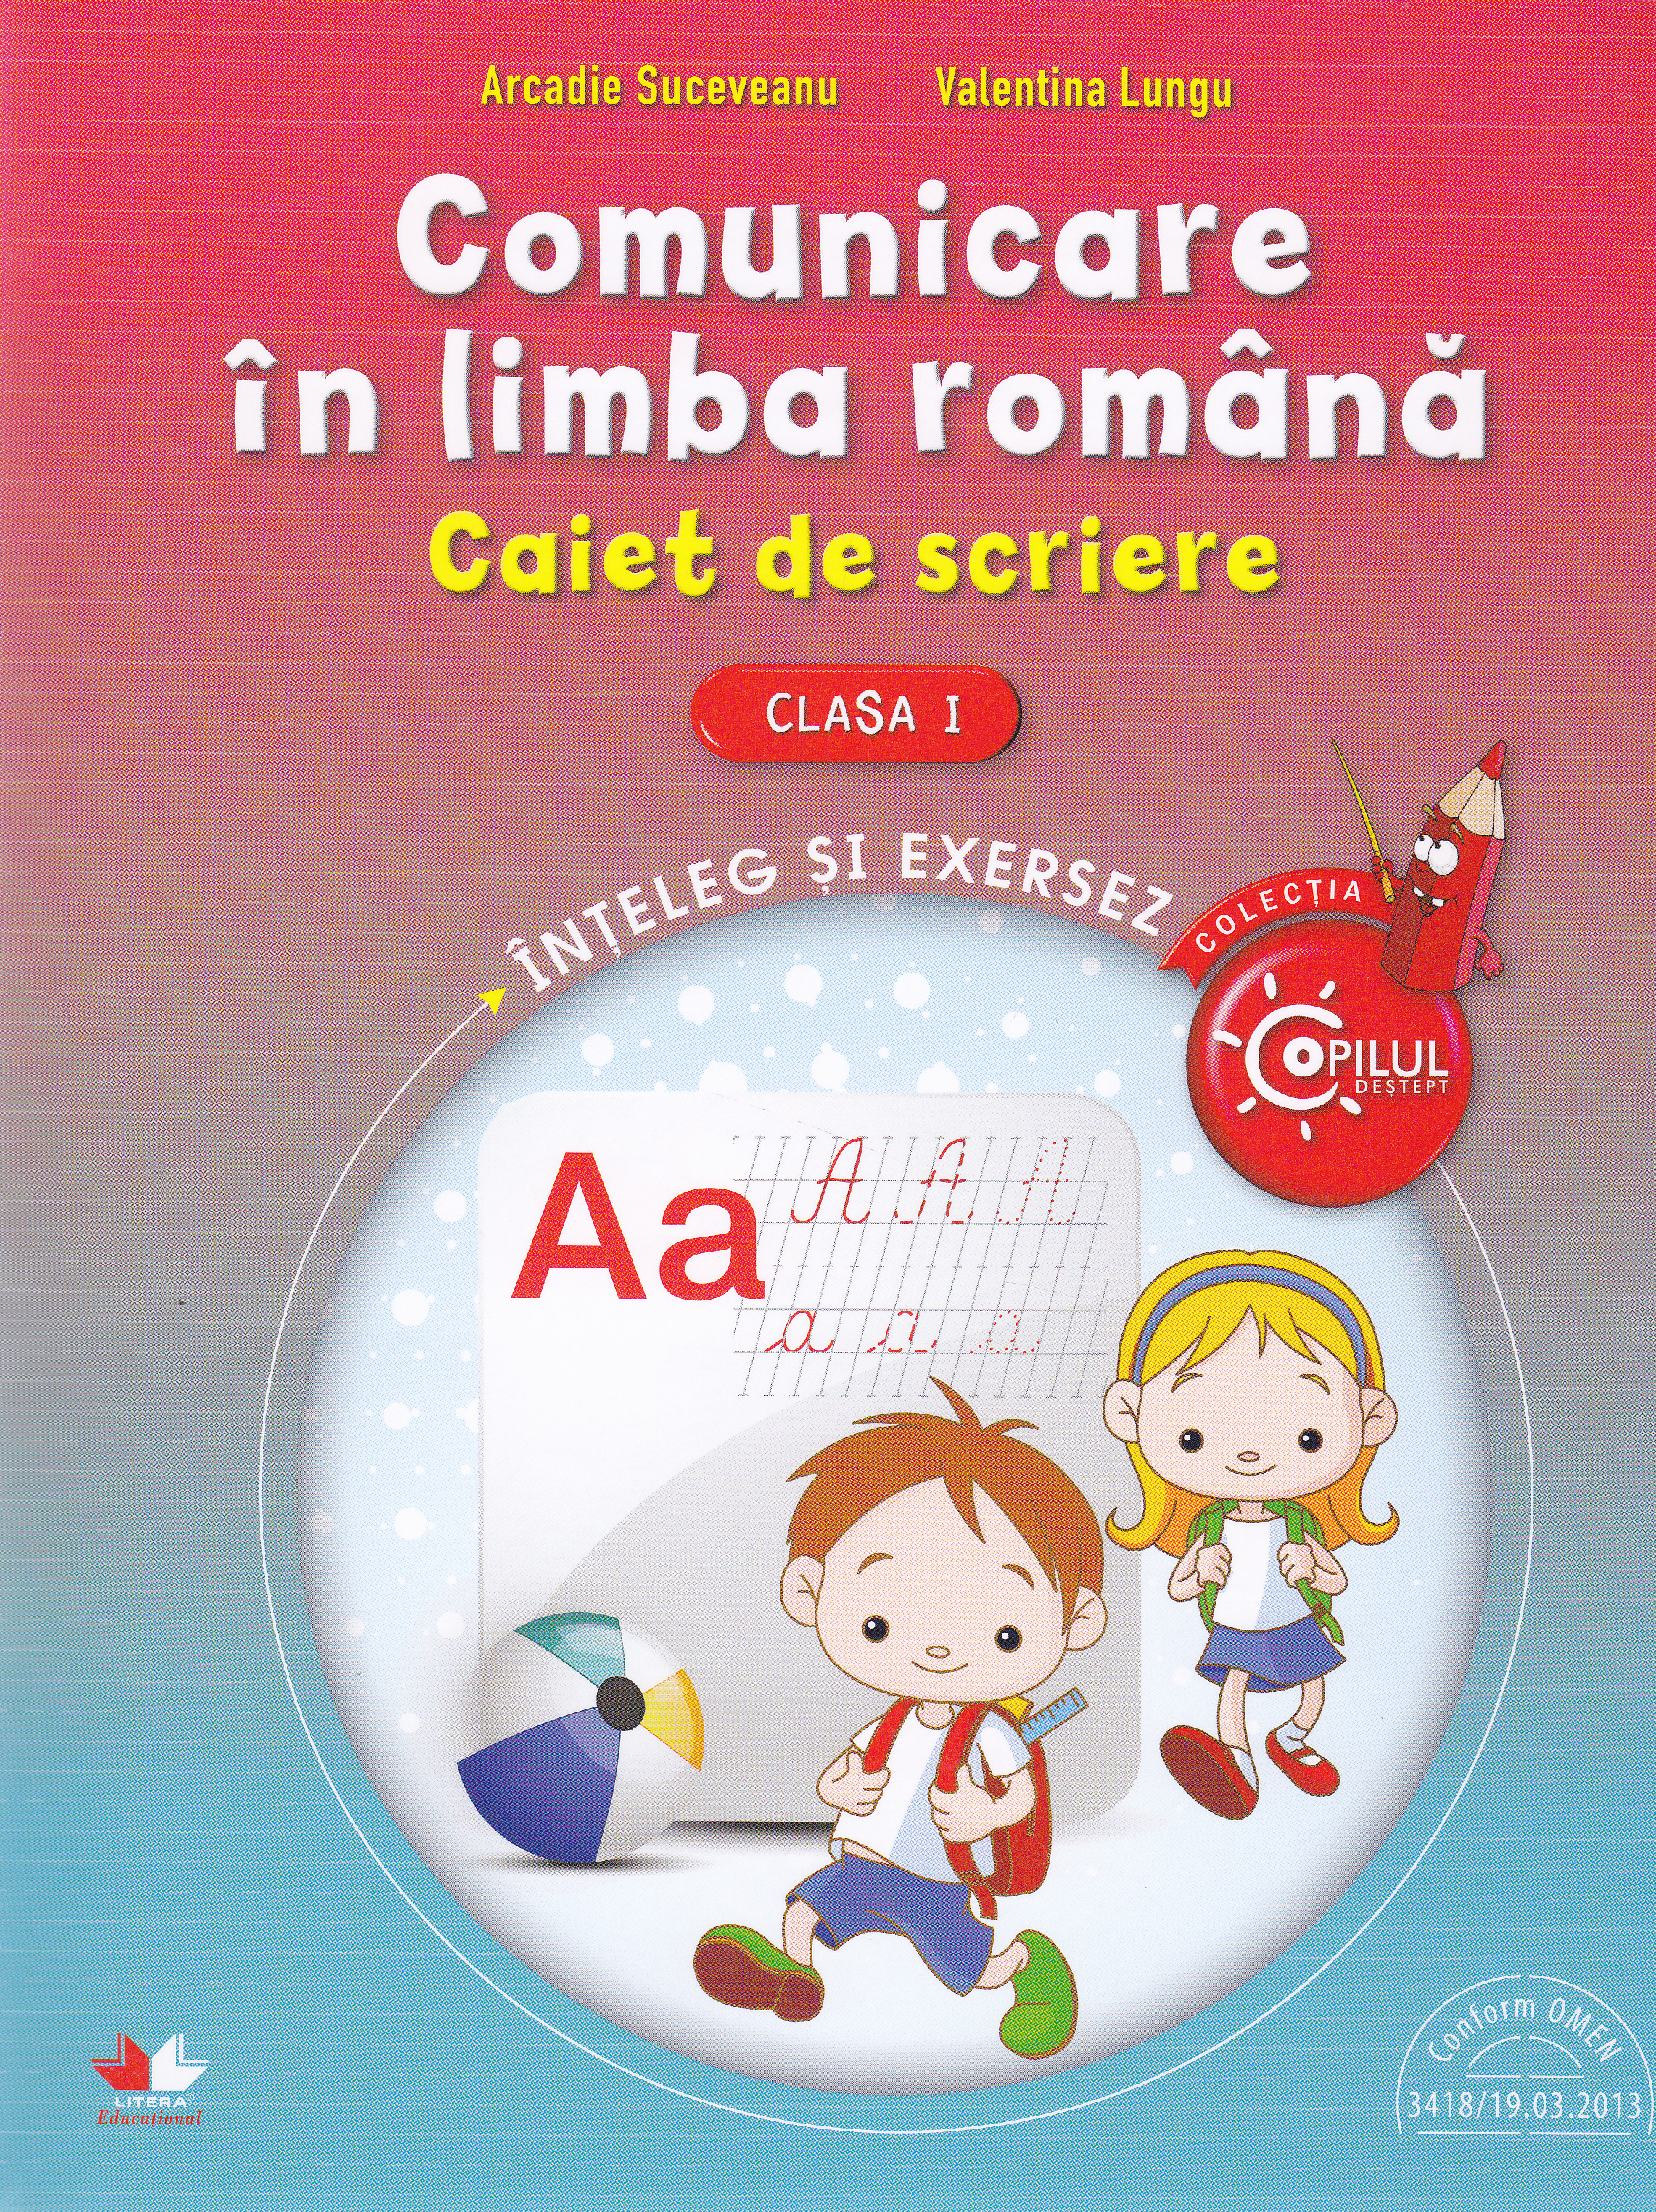 Comunicare in limba romana - Clasa 1 - Caiet de scriere - Arcadie Suceveanu, Valentina Lungu